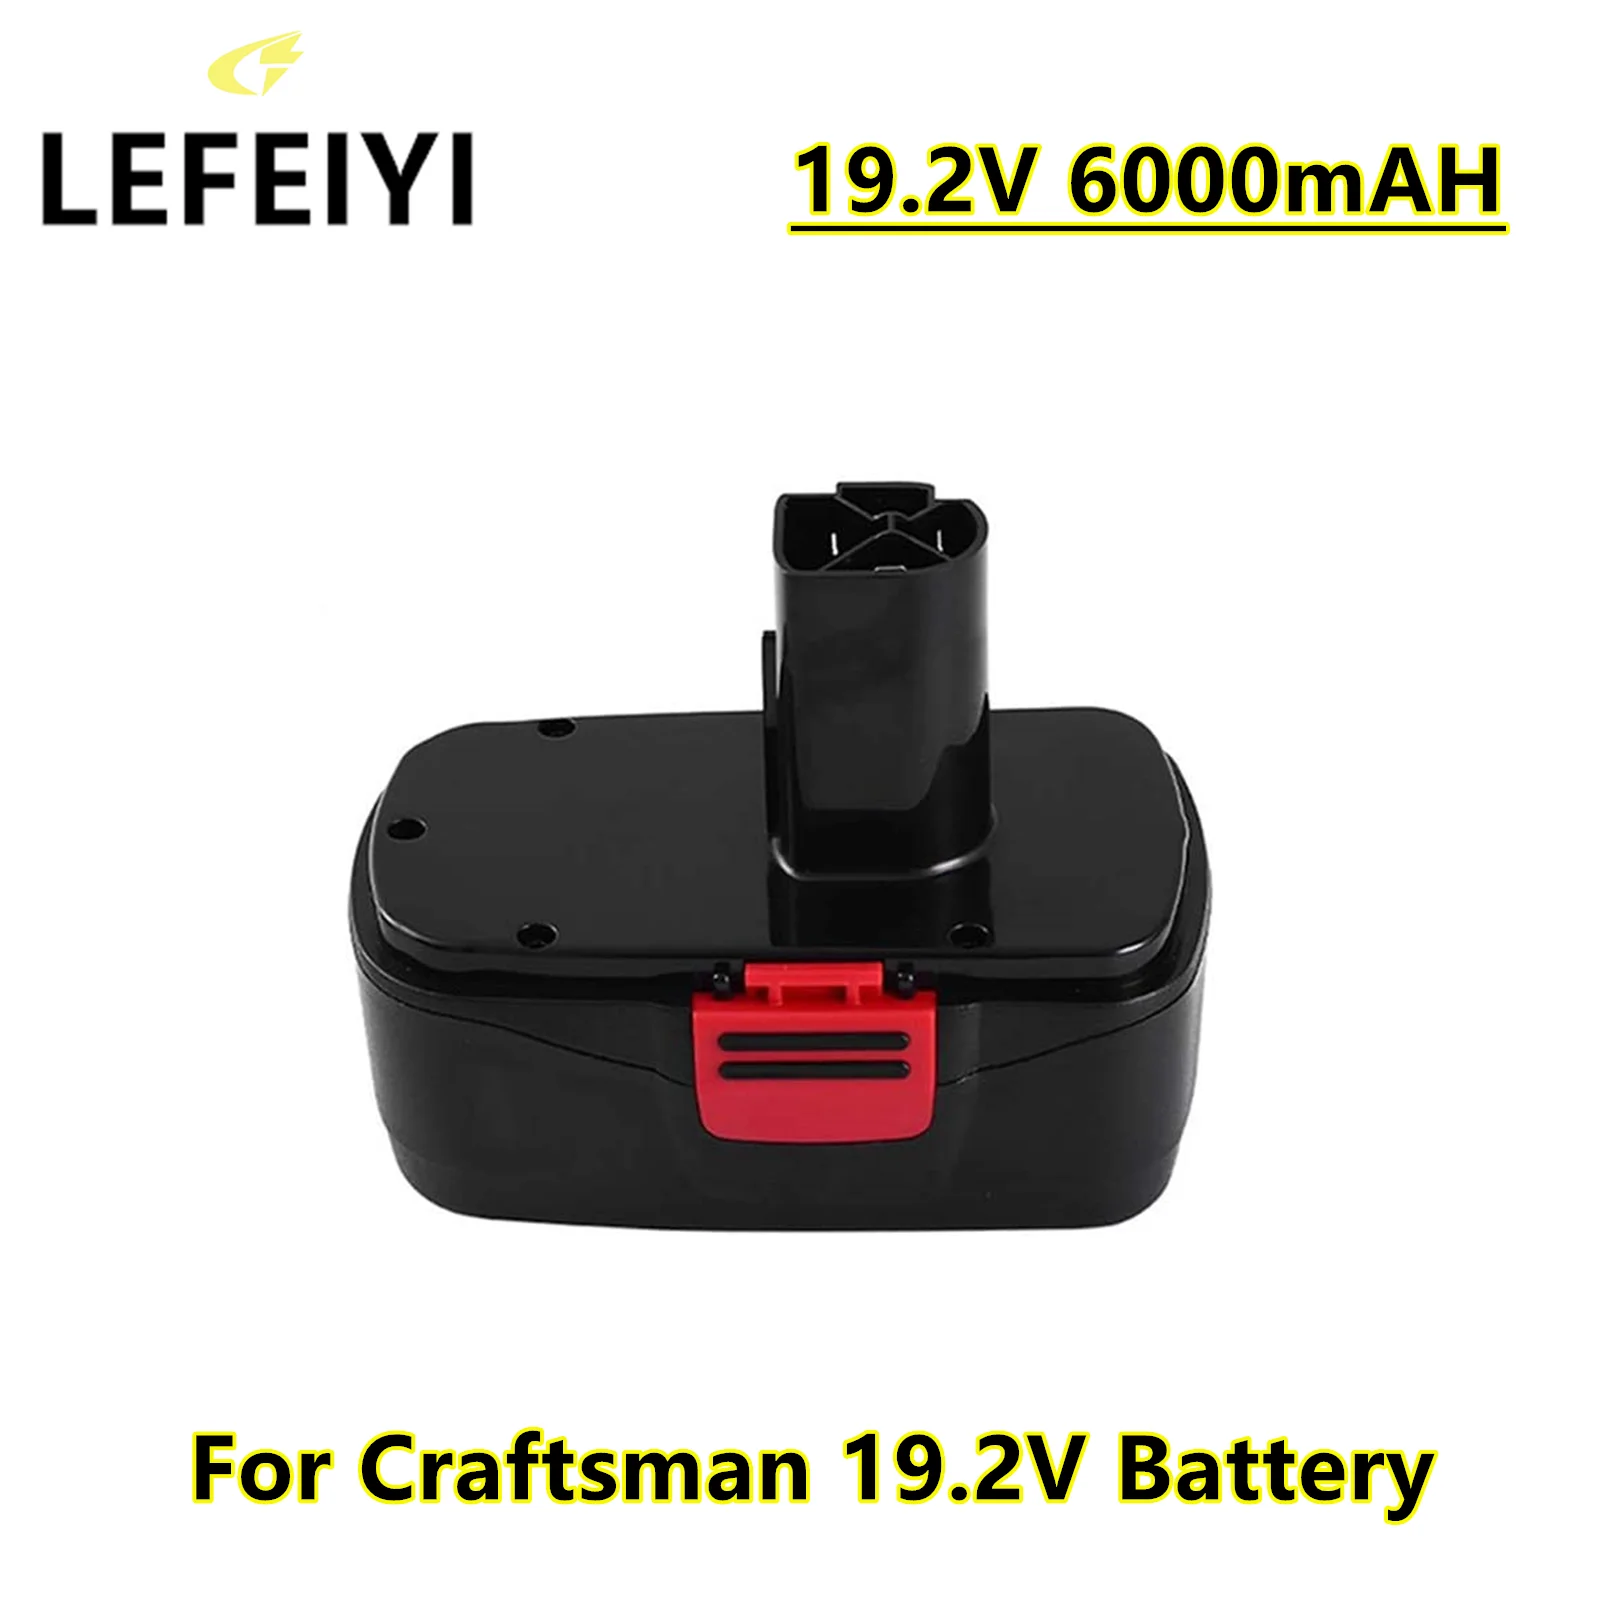 

6000mAh Ni-MH Replacement Battery for Craftsman 19.2V Battery C3 DieHard 130279005 130279003 130279017 315.113753 315.115410